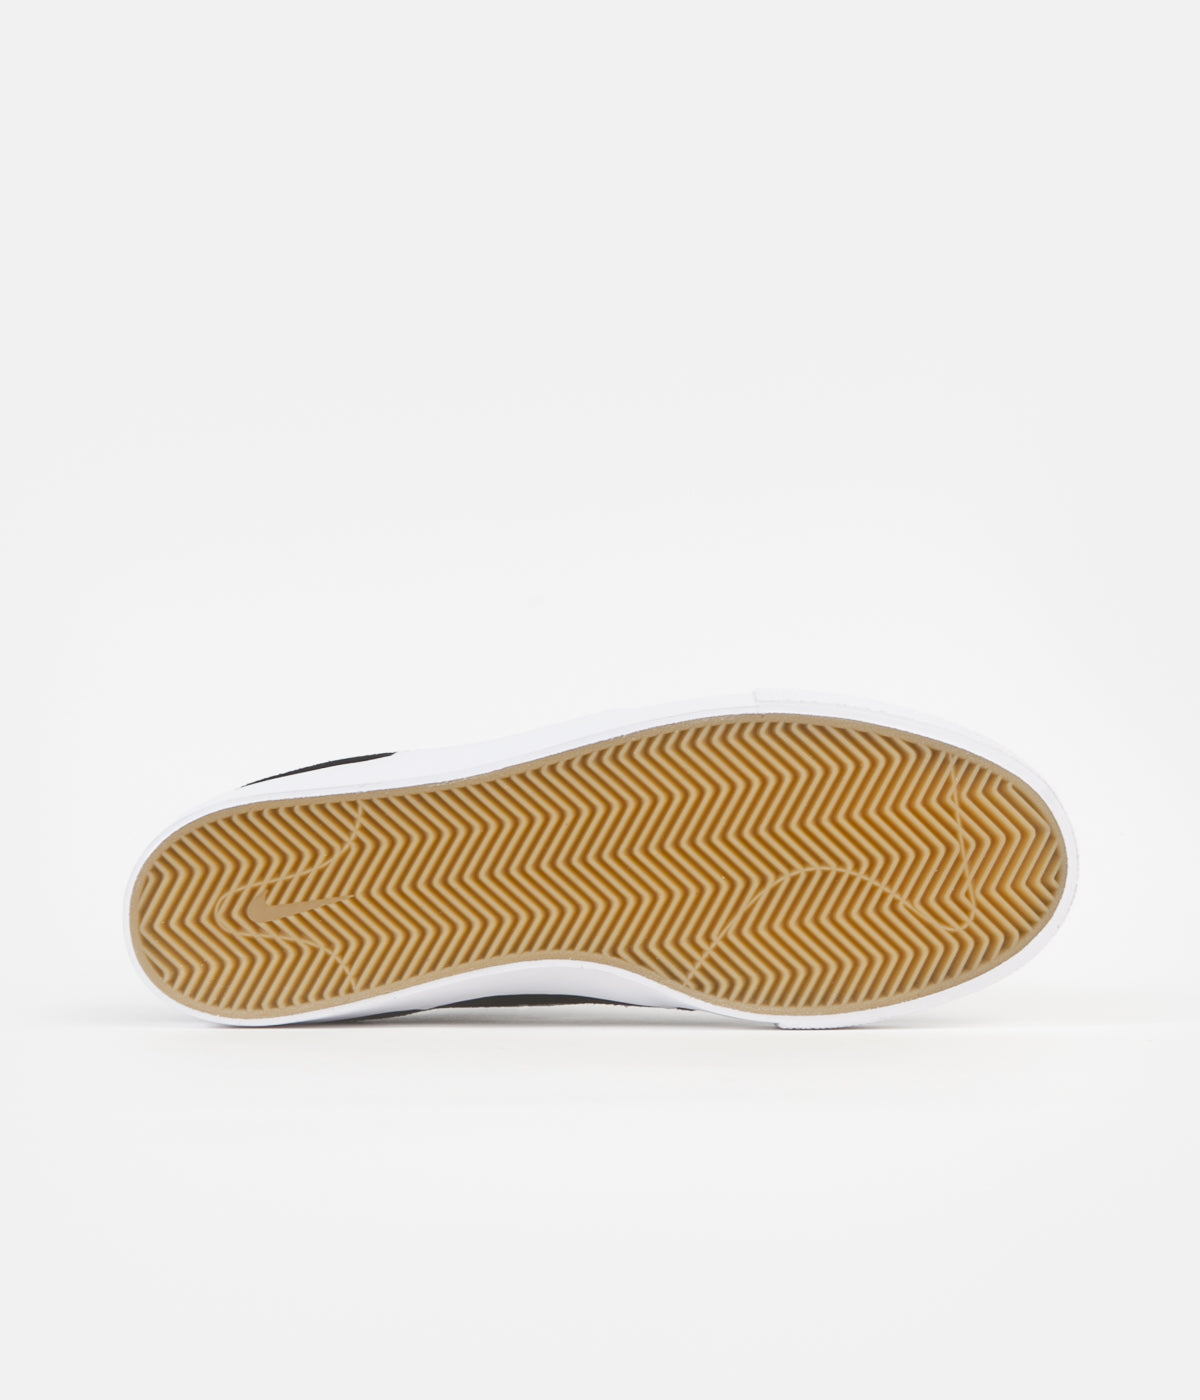 Nike Remastered Shoes - Black / White - Grey - Gum | Flatspot